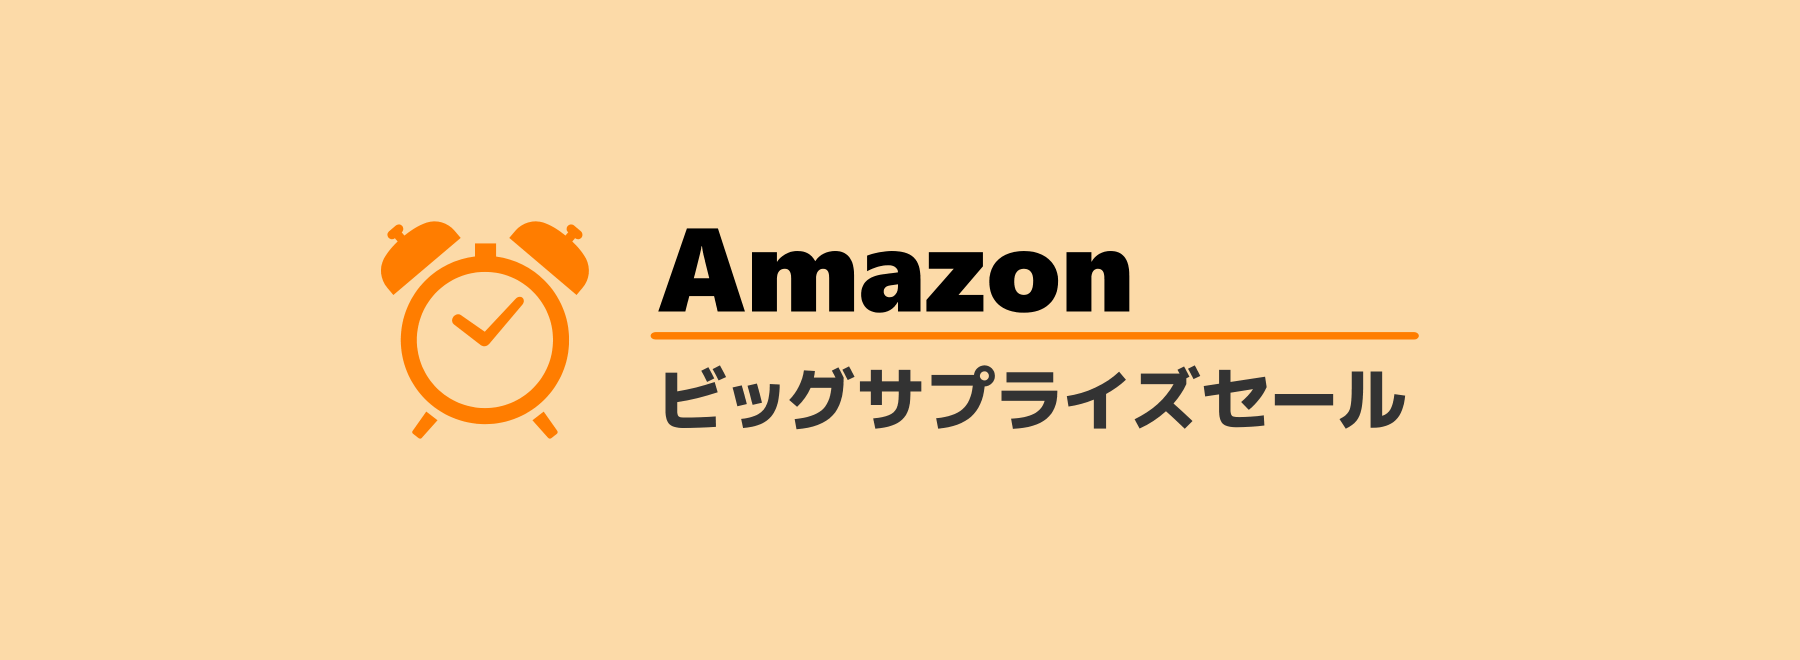 Amazon ビッグサプライズセール